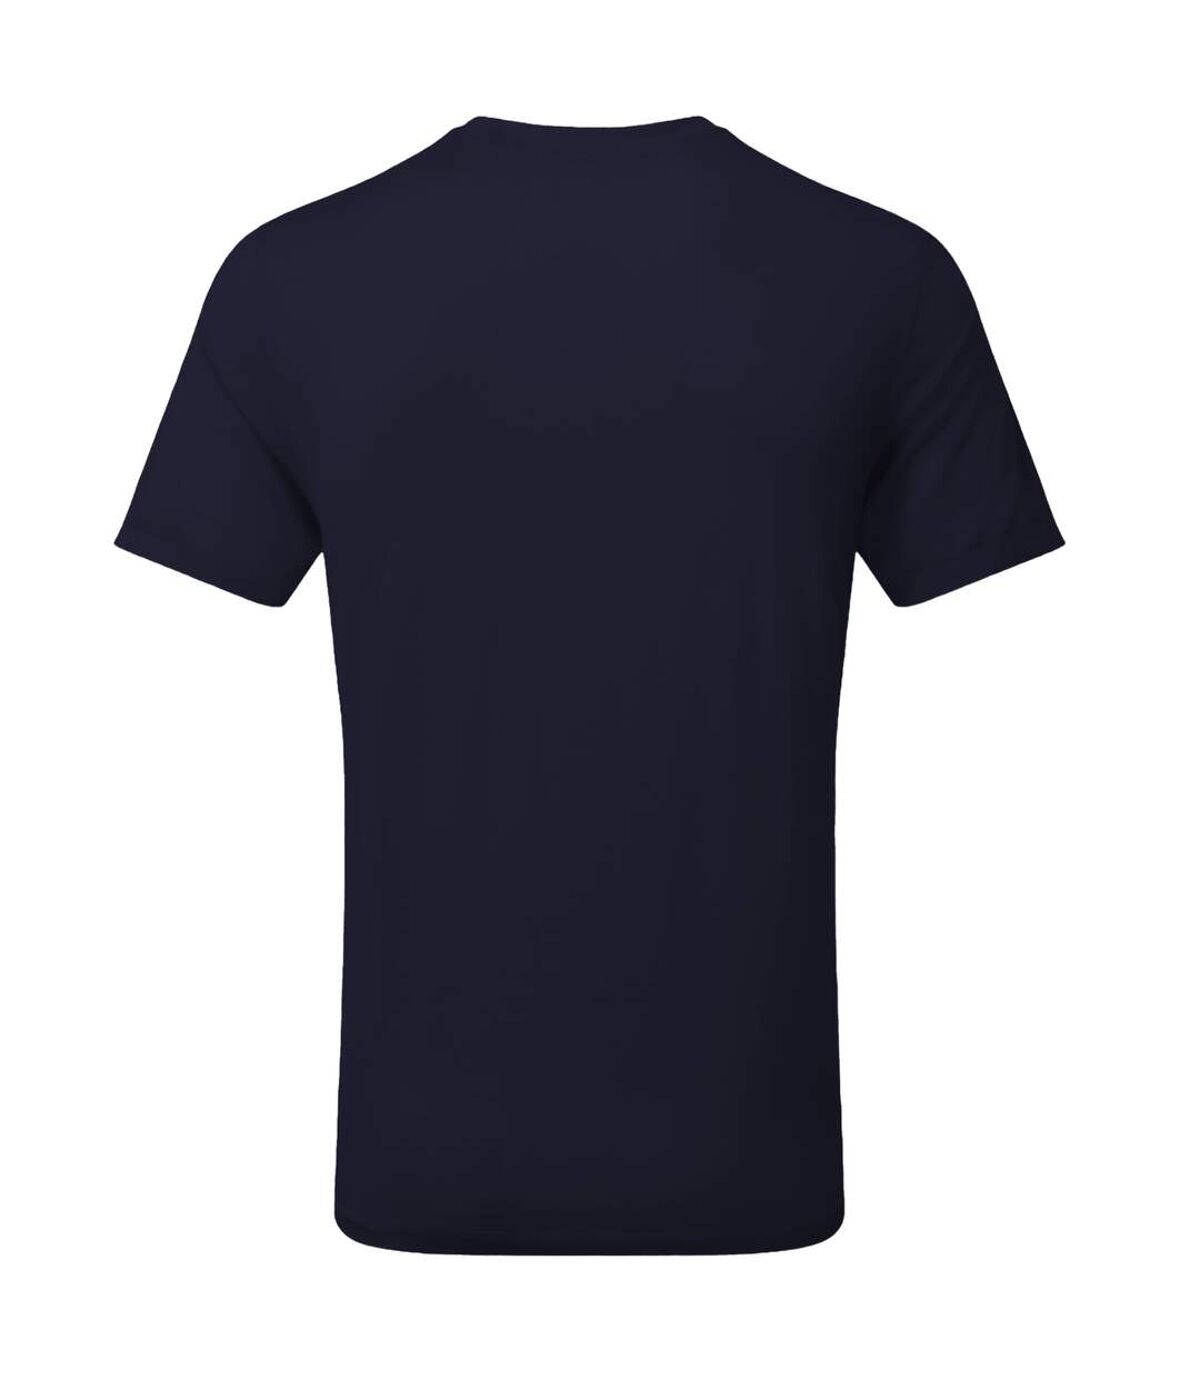 B&C Favourite - T-shirt en coton bio - Homme (Bleu marine) - UTBC3635